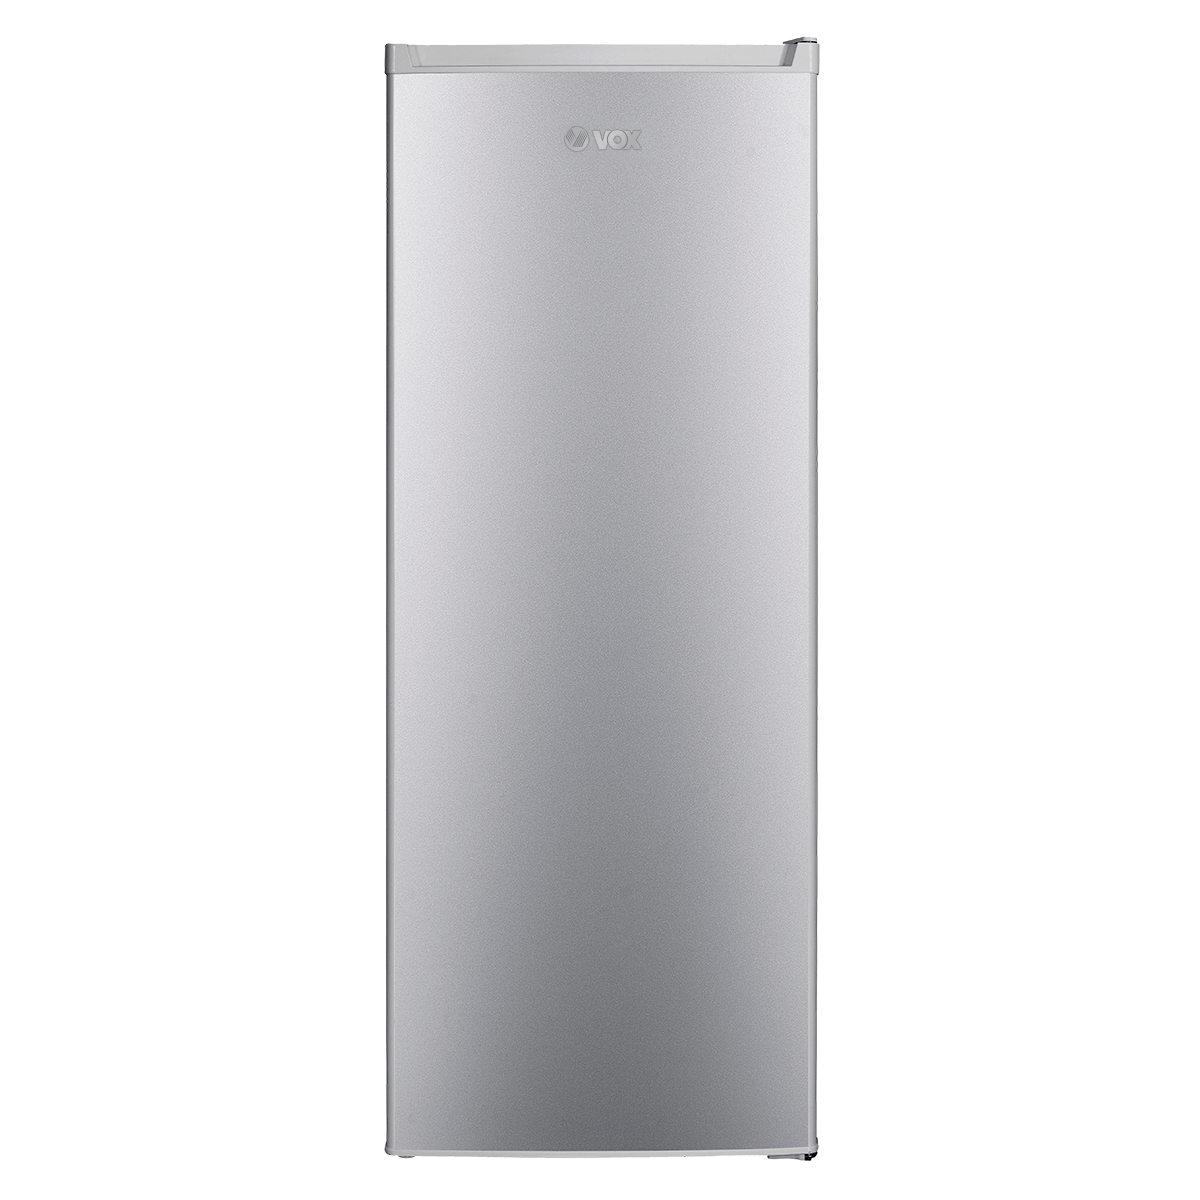 Vertical freezer VF 2520 SF 